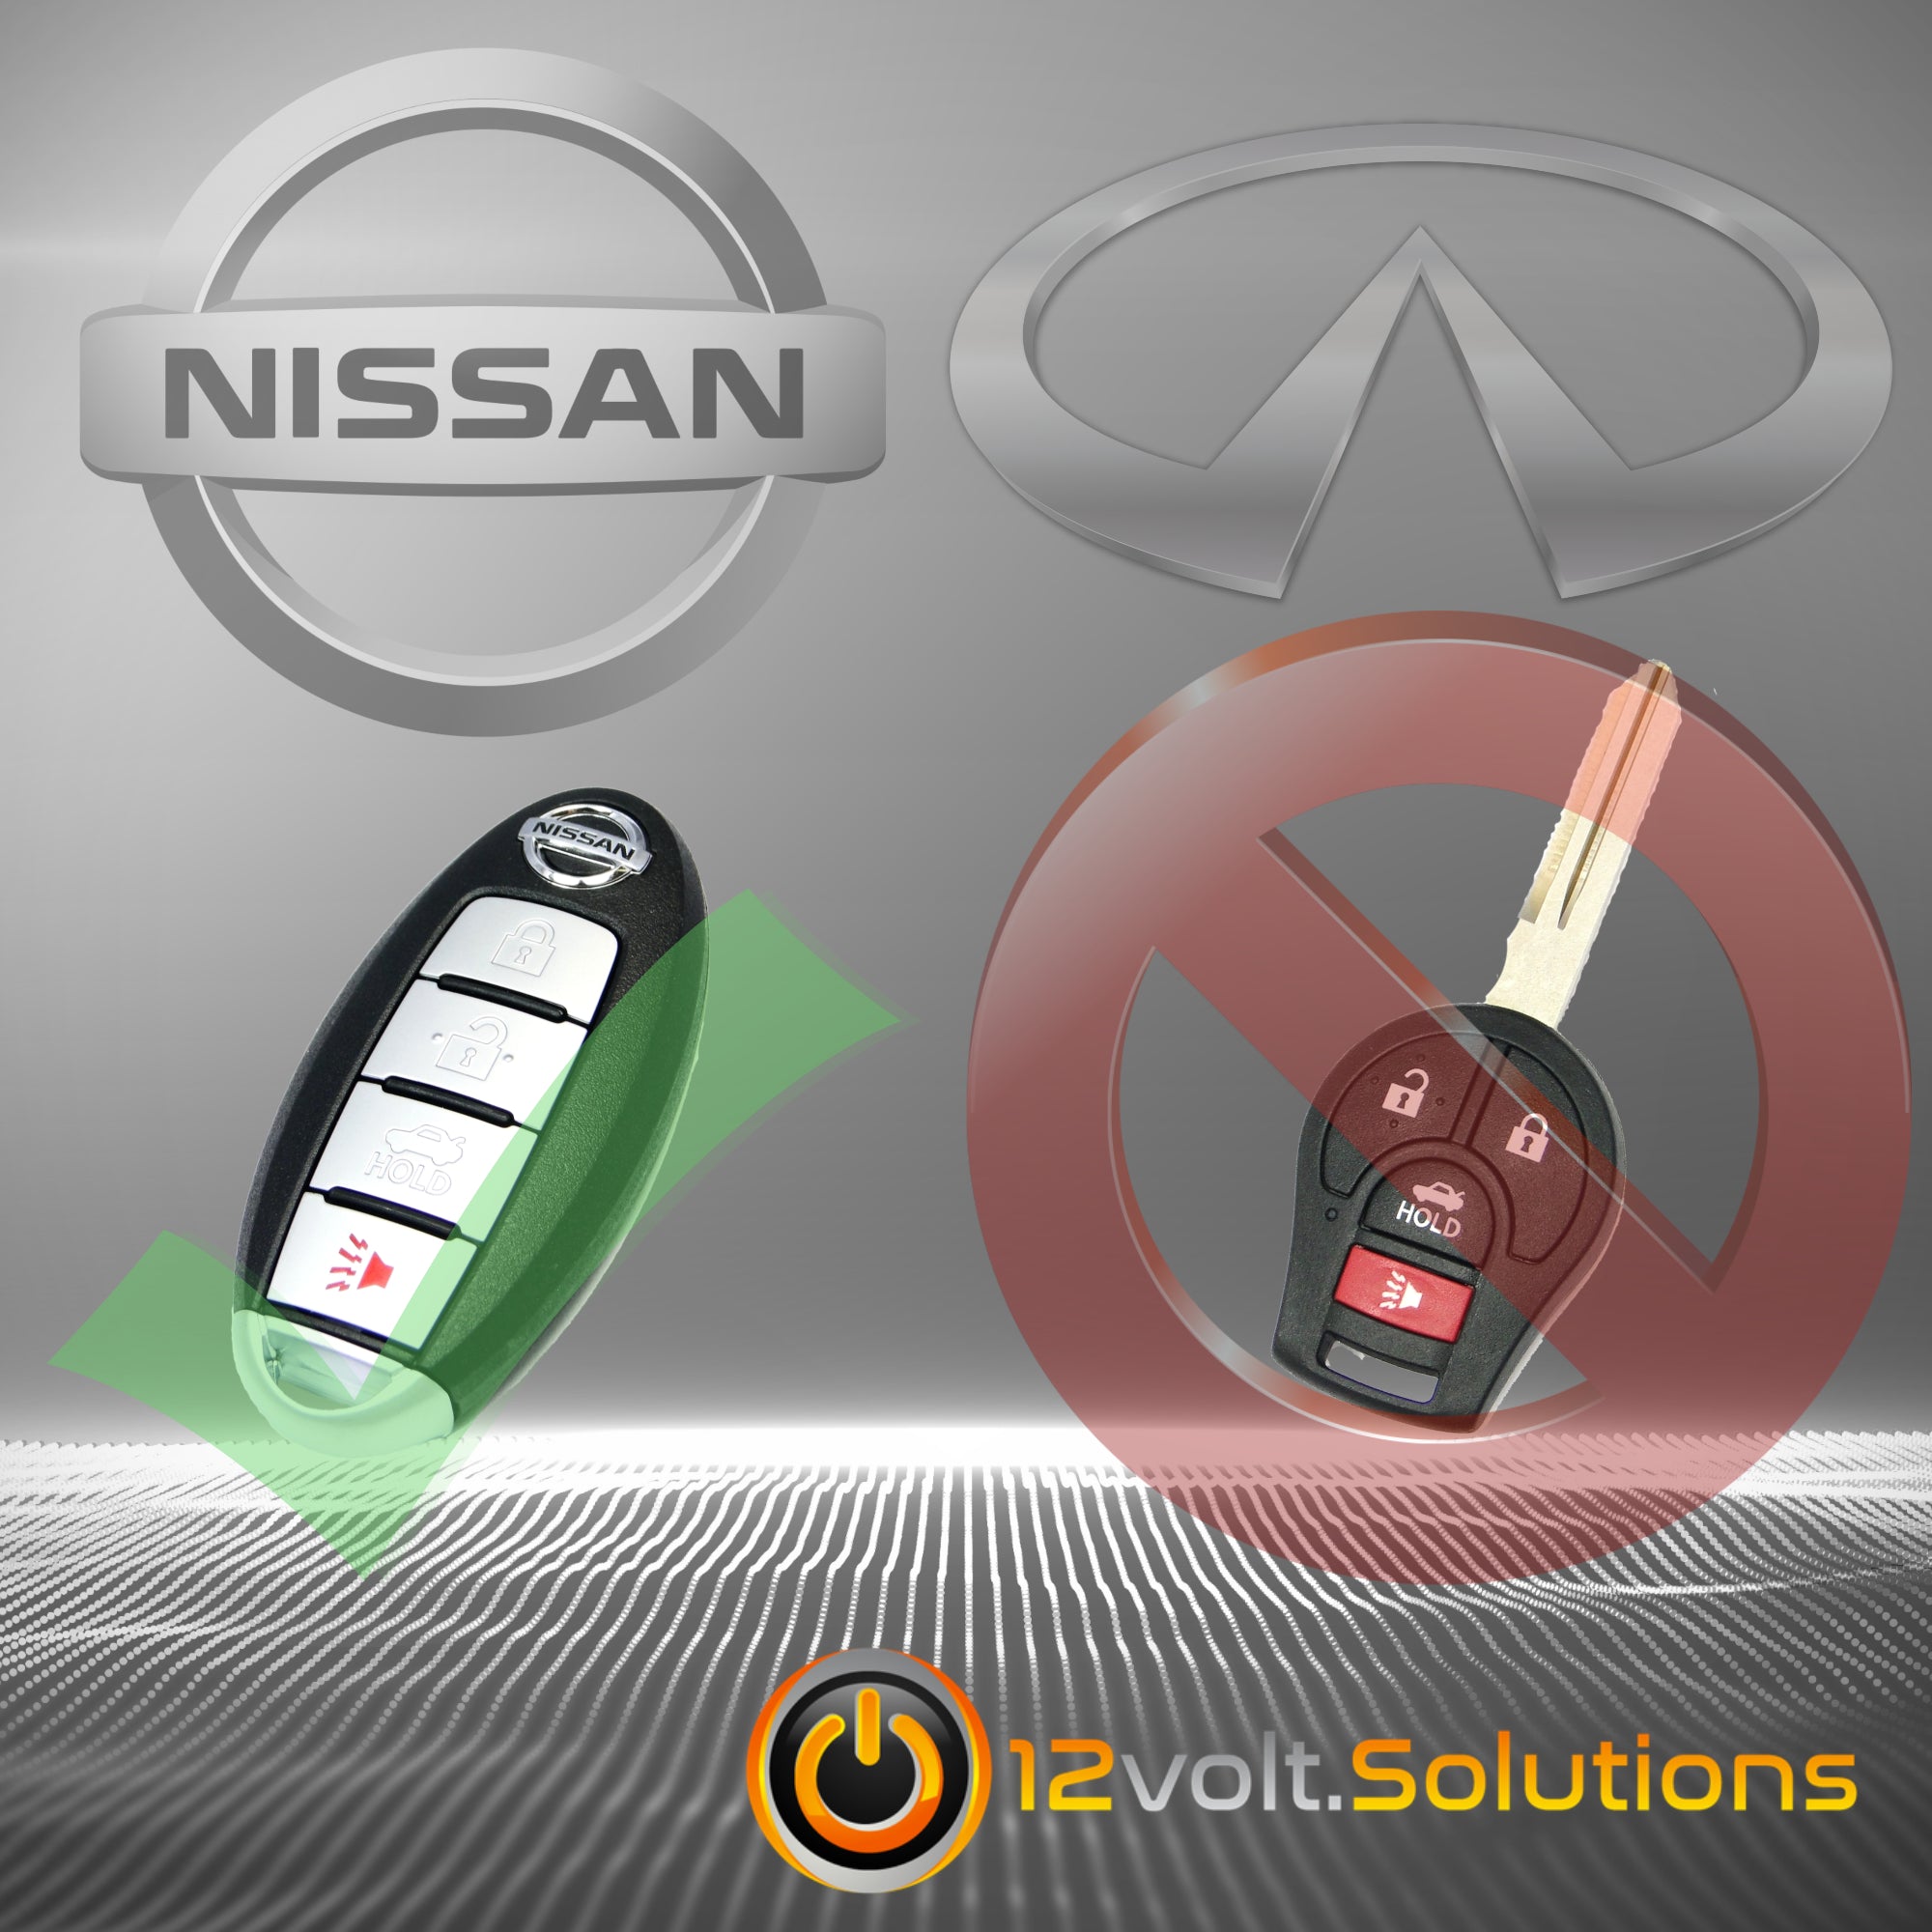 2007-2012 Nissan Sentra Remote Start Plug and Play Kit (Intelligent Key)-12Volt.Solutions